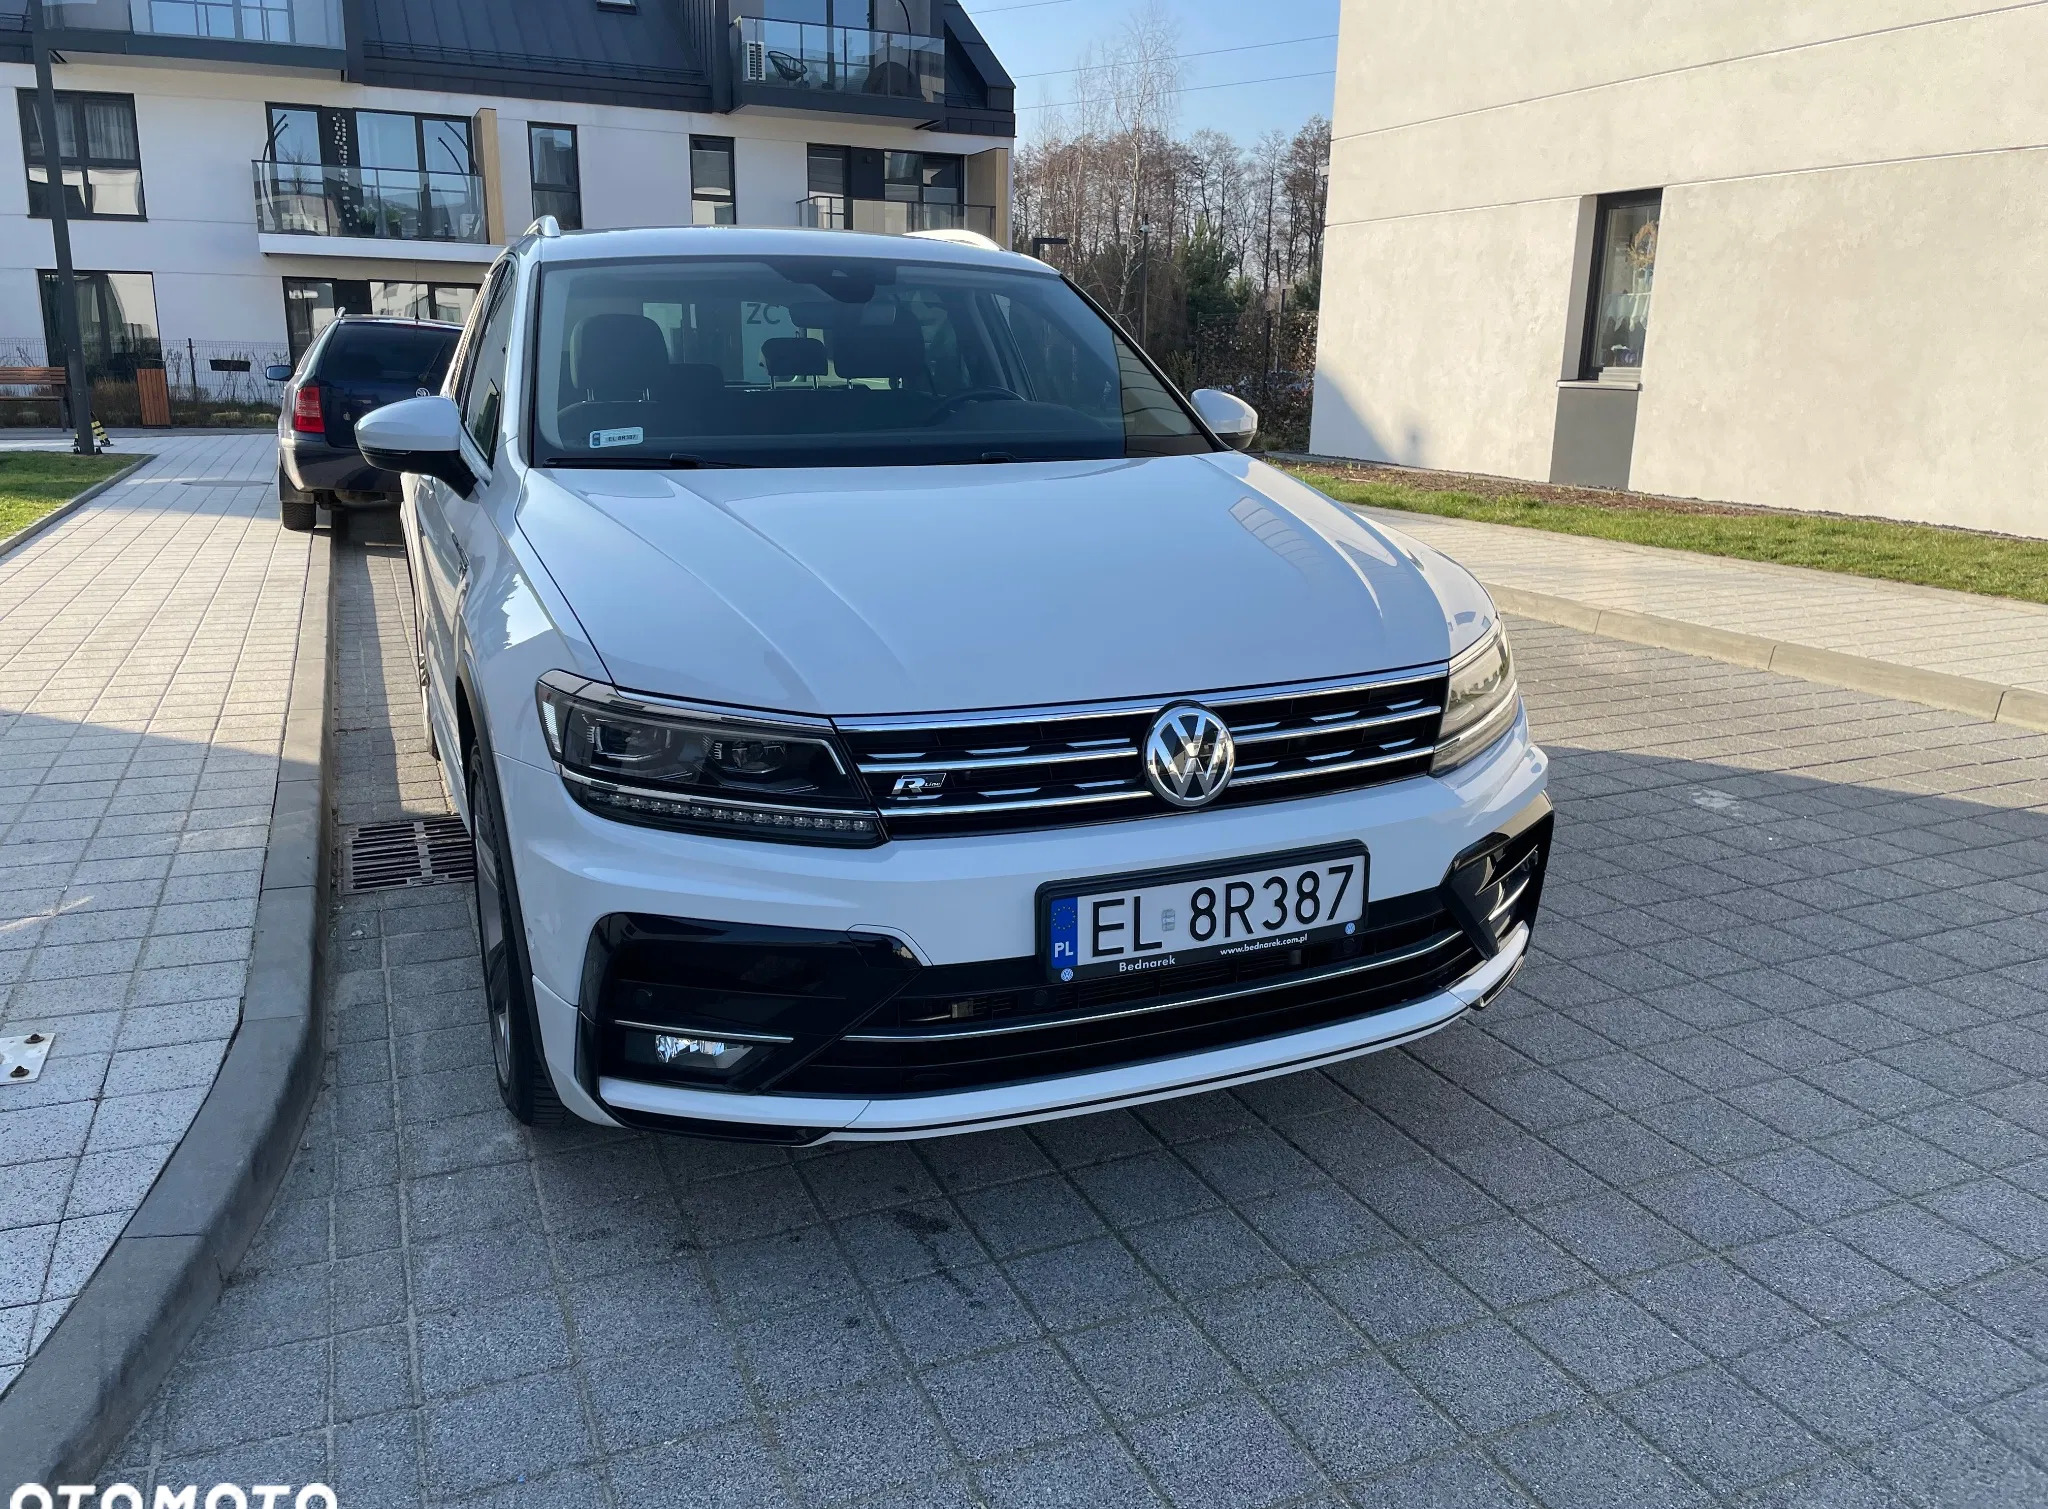 volkswagen Volkswagen Tiguan cena 134000 przebieg: 47151, rok produkcji 2019 z Łódź